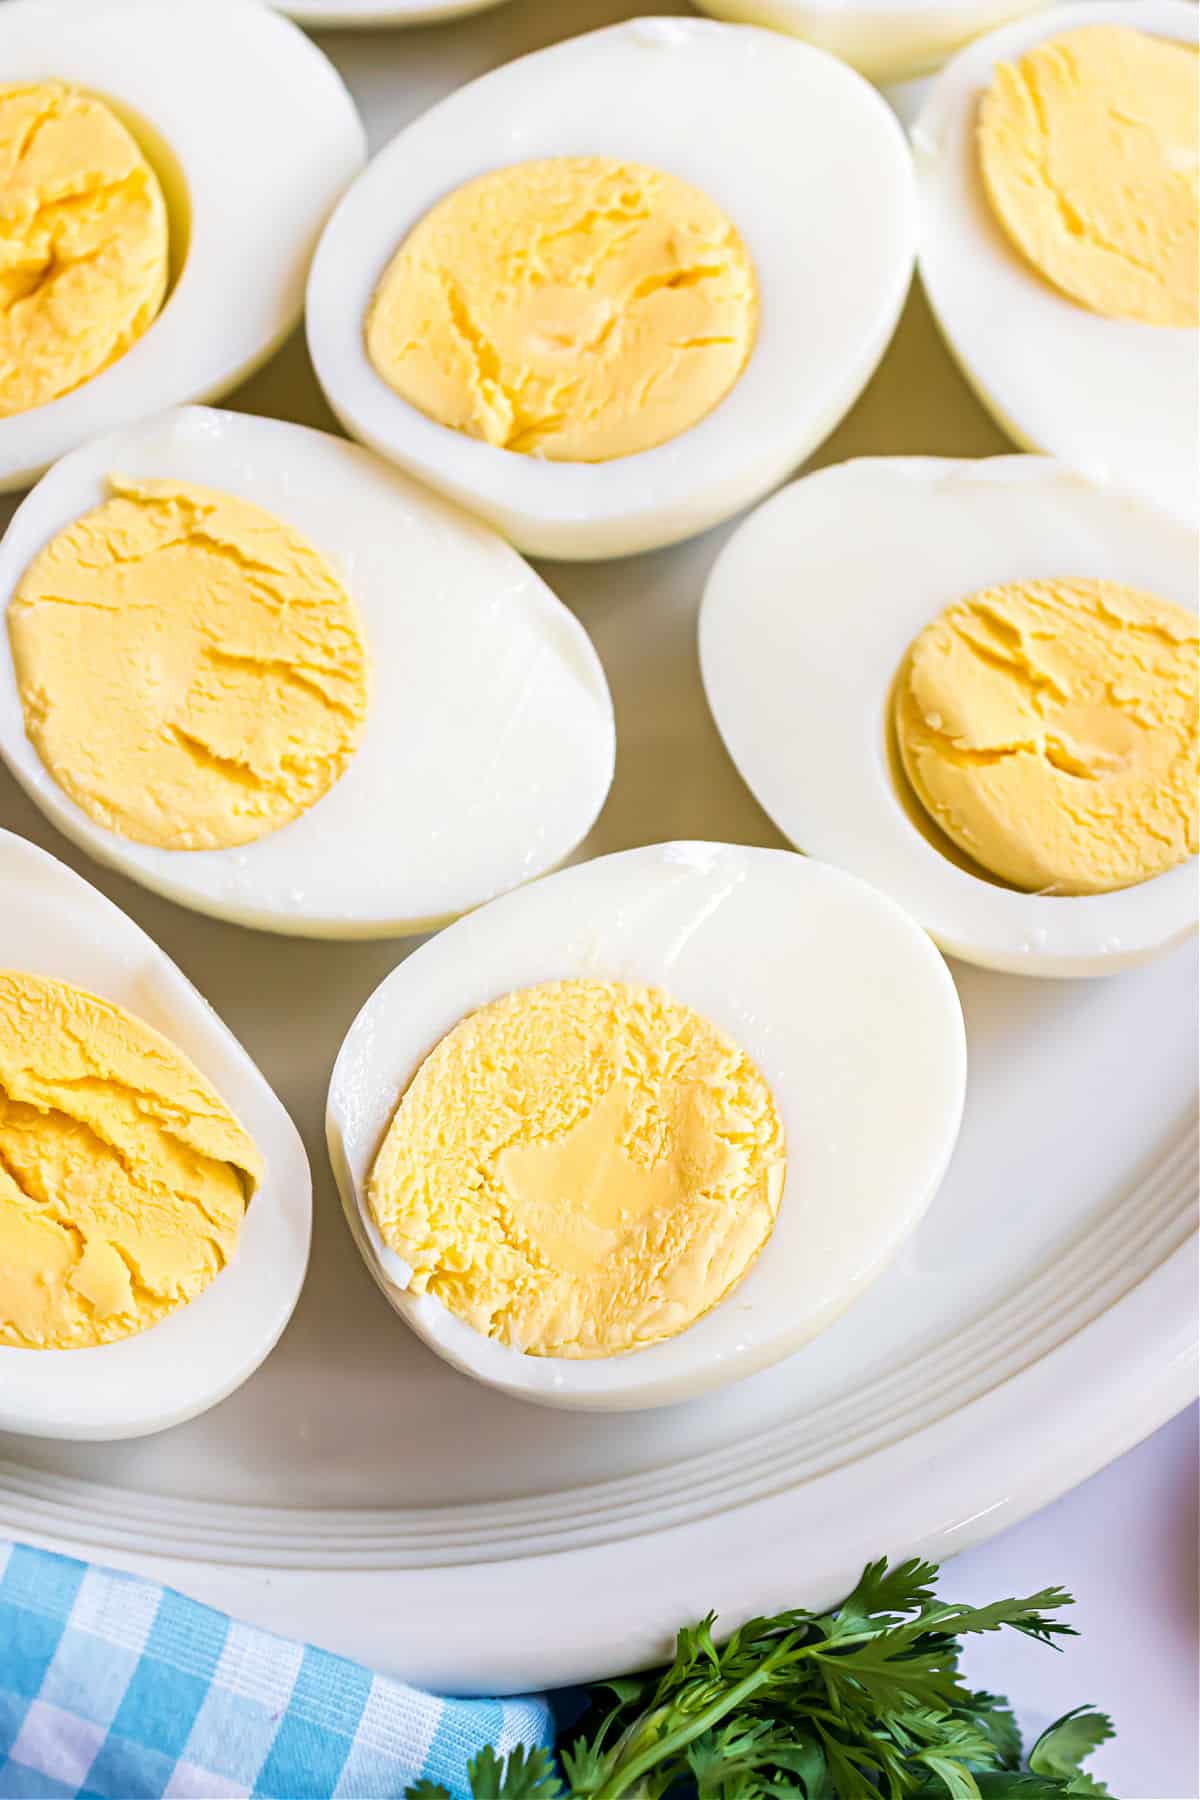 https://www.shugarysweets.com/wp-content/uploads/2018/02/instant-pot-eggs-plated.jpg